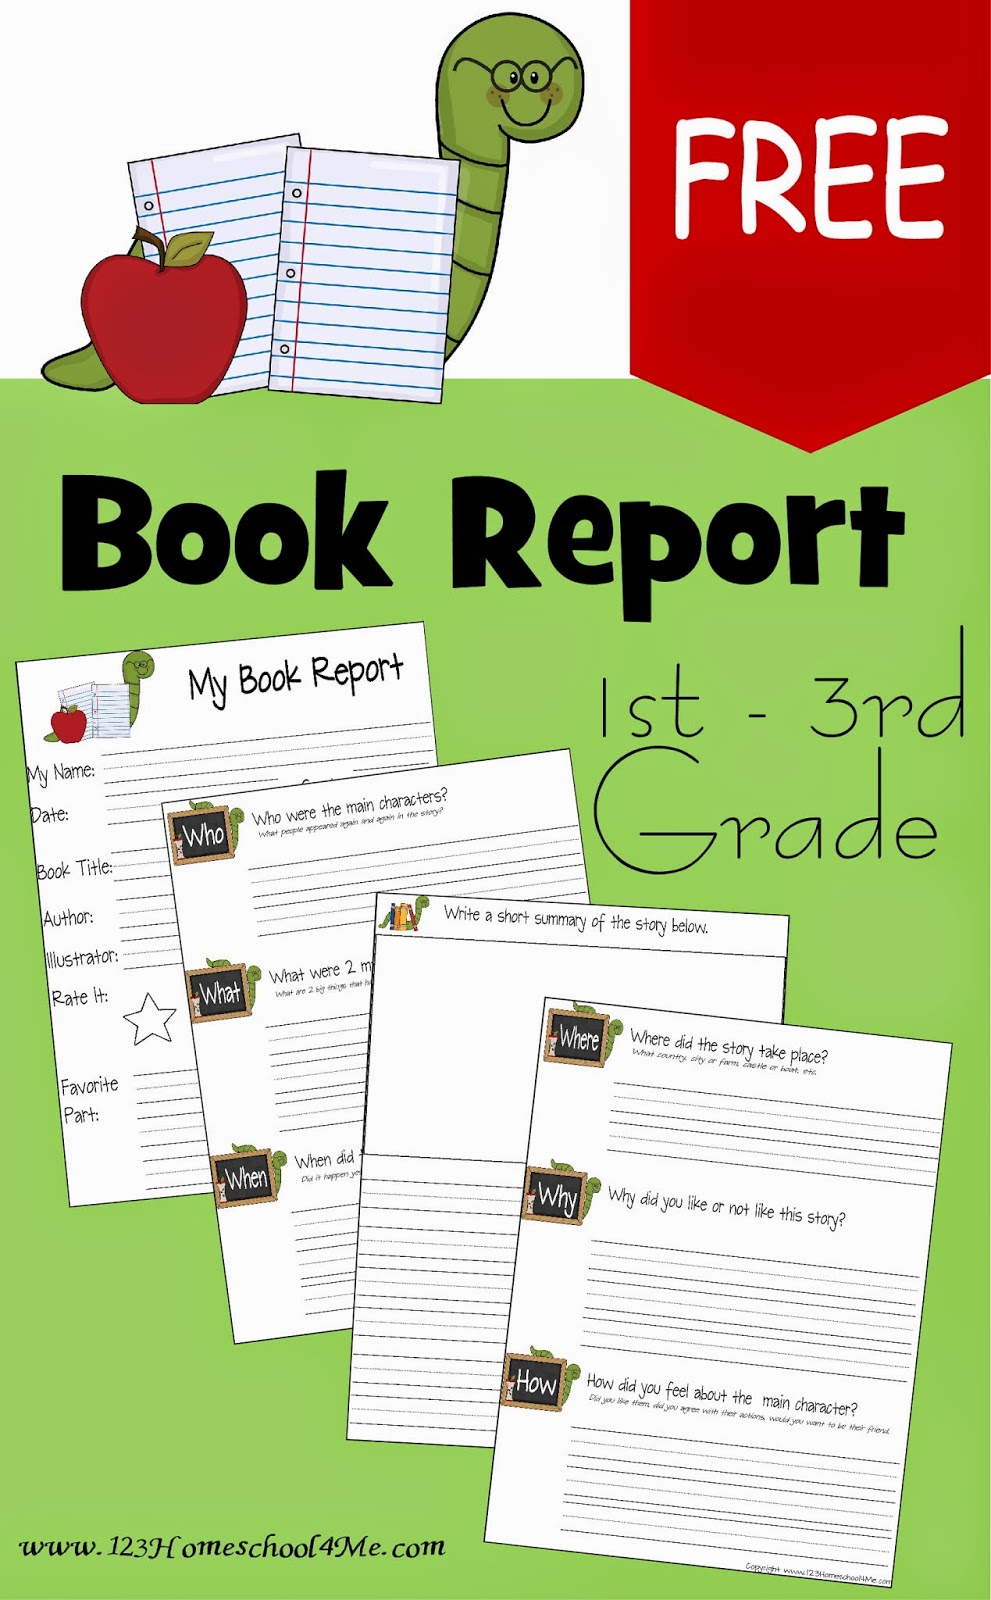 FREE Book Report Template - Educational Freebies Within Book Report Template 2nd Grade